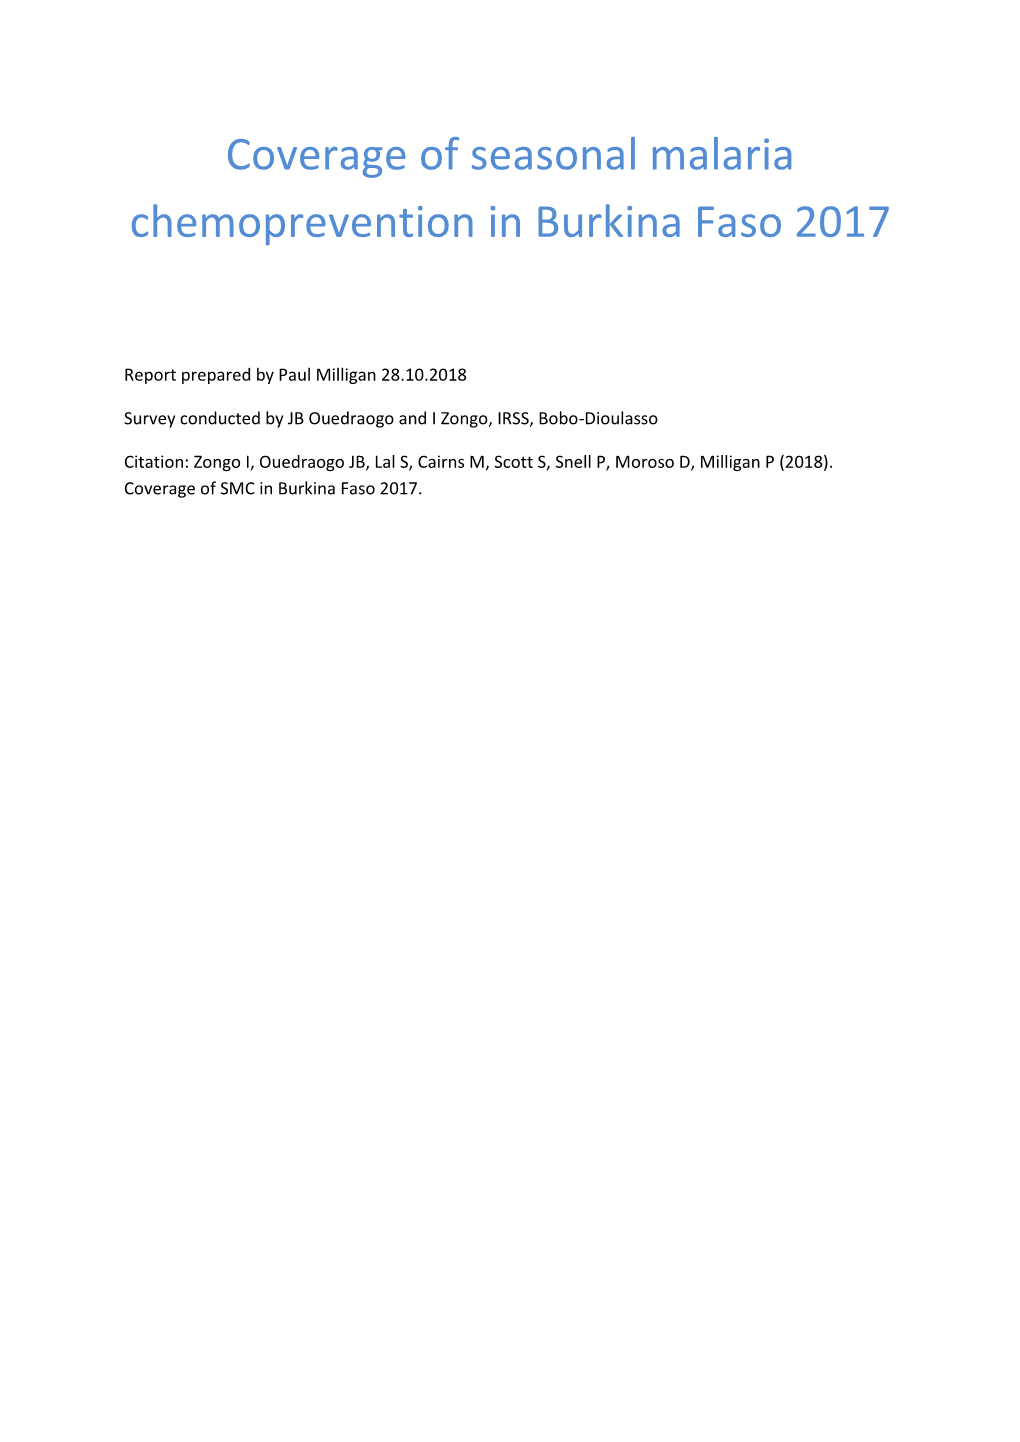 Coverage of Seasonal Malaria Chemoprevention in Burkina Faso 2017